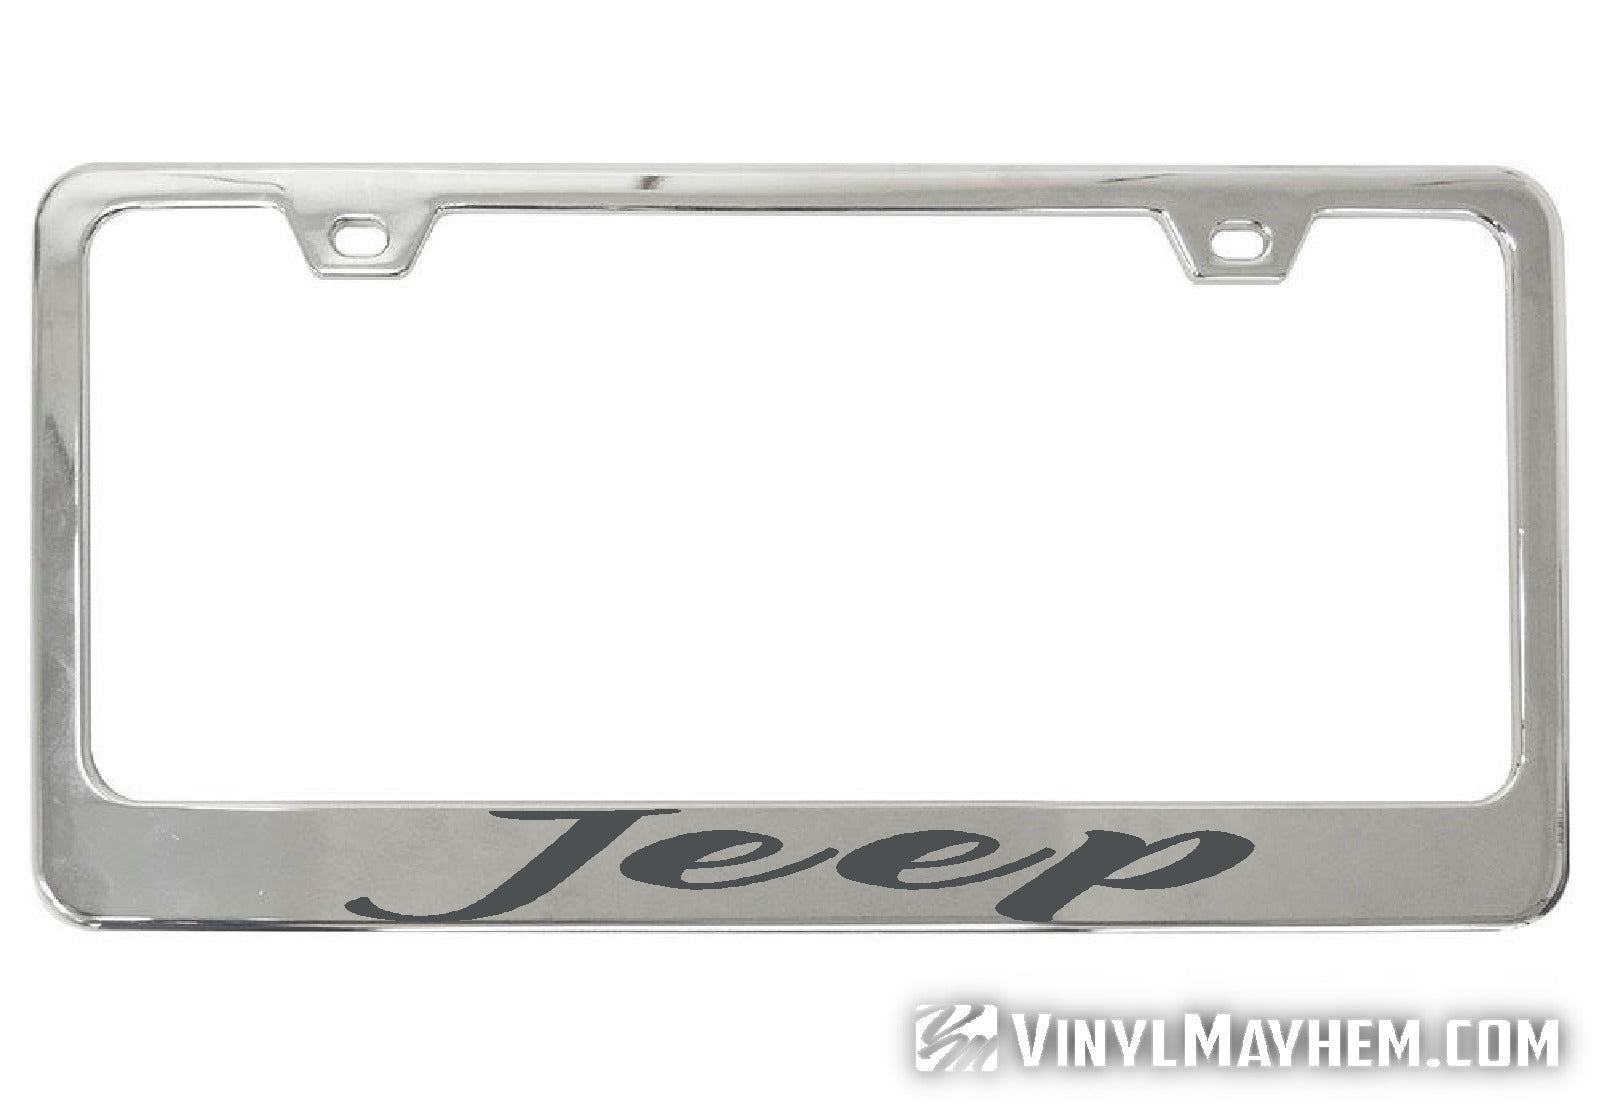 Jeep chrome license plate frame